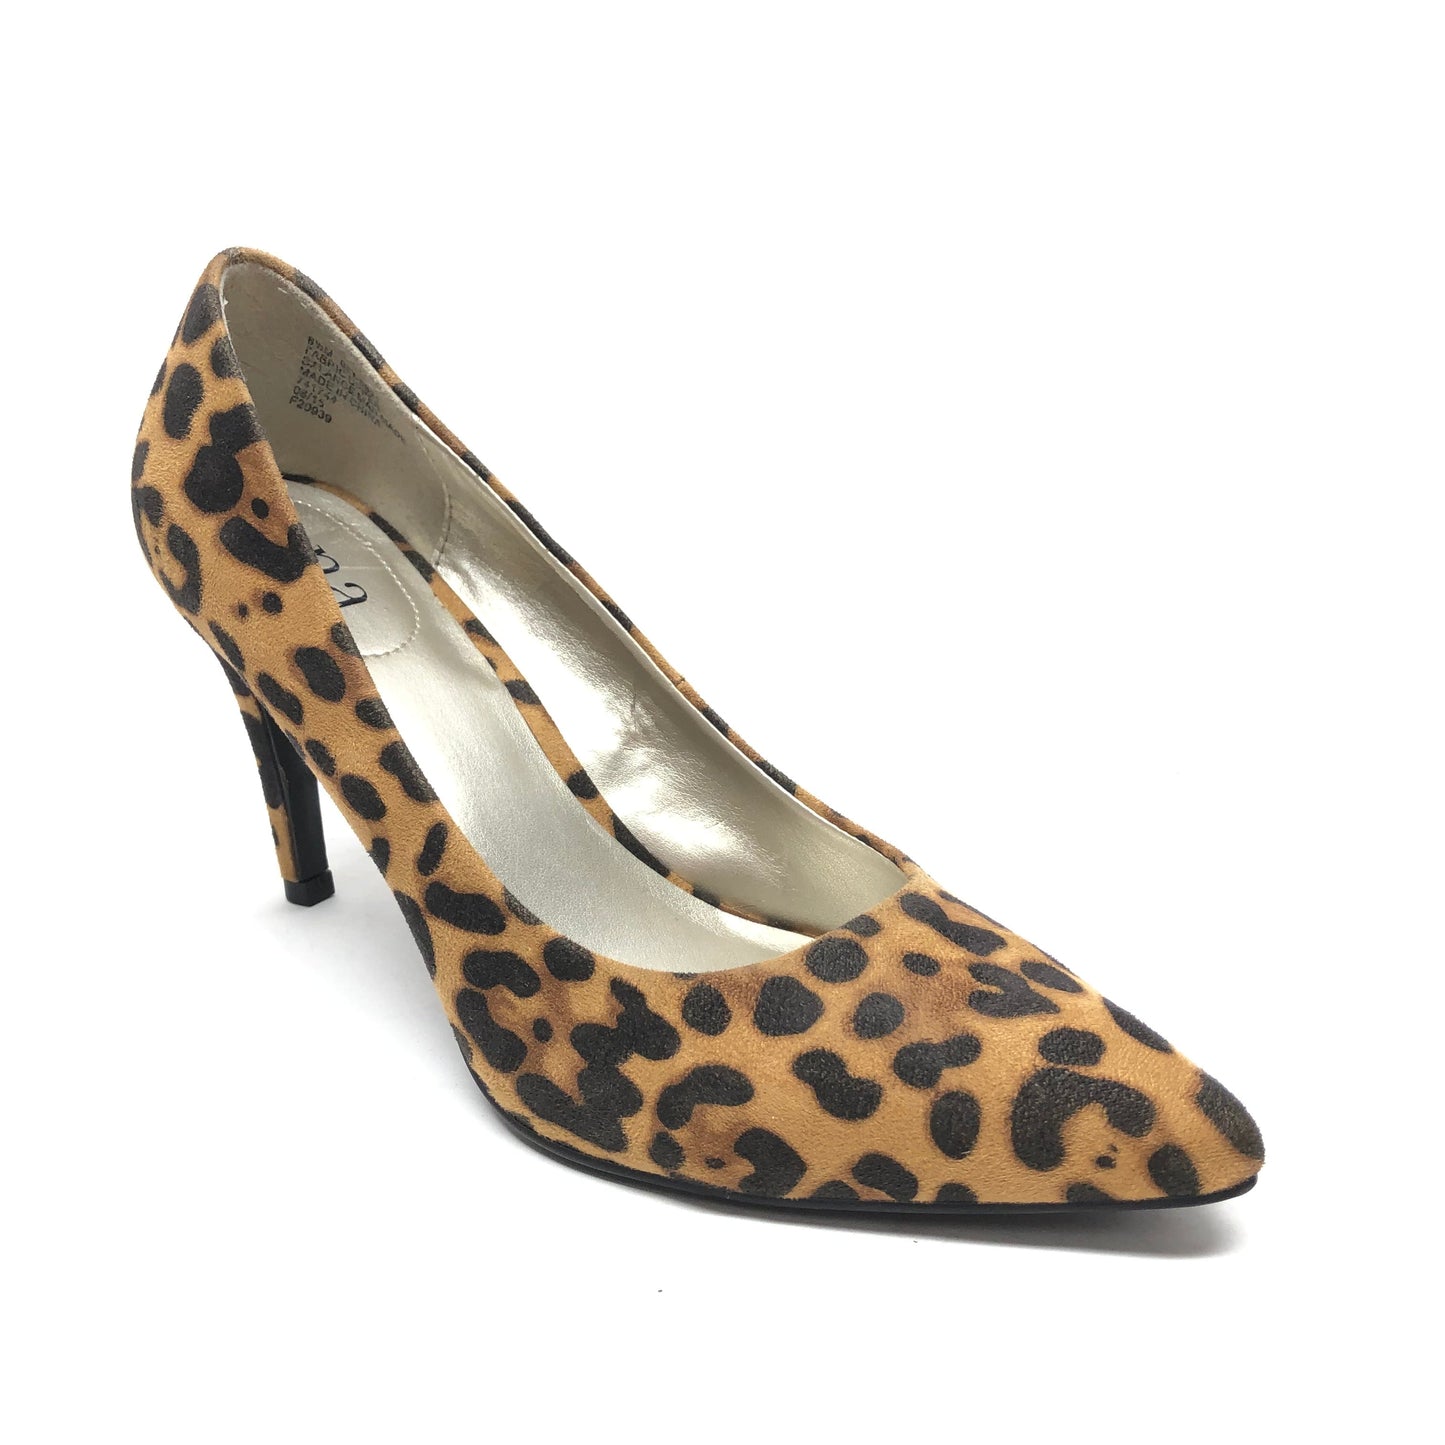 Leopard Print Shoes Heels Stiletto Ana, Size 8.5